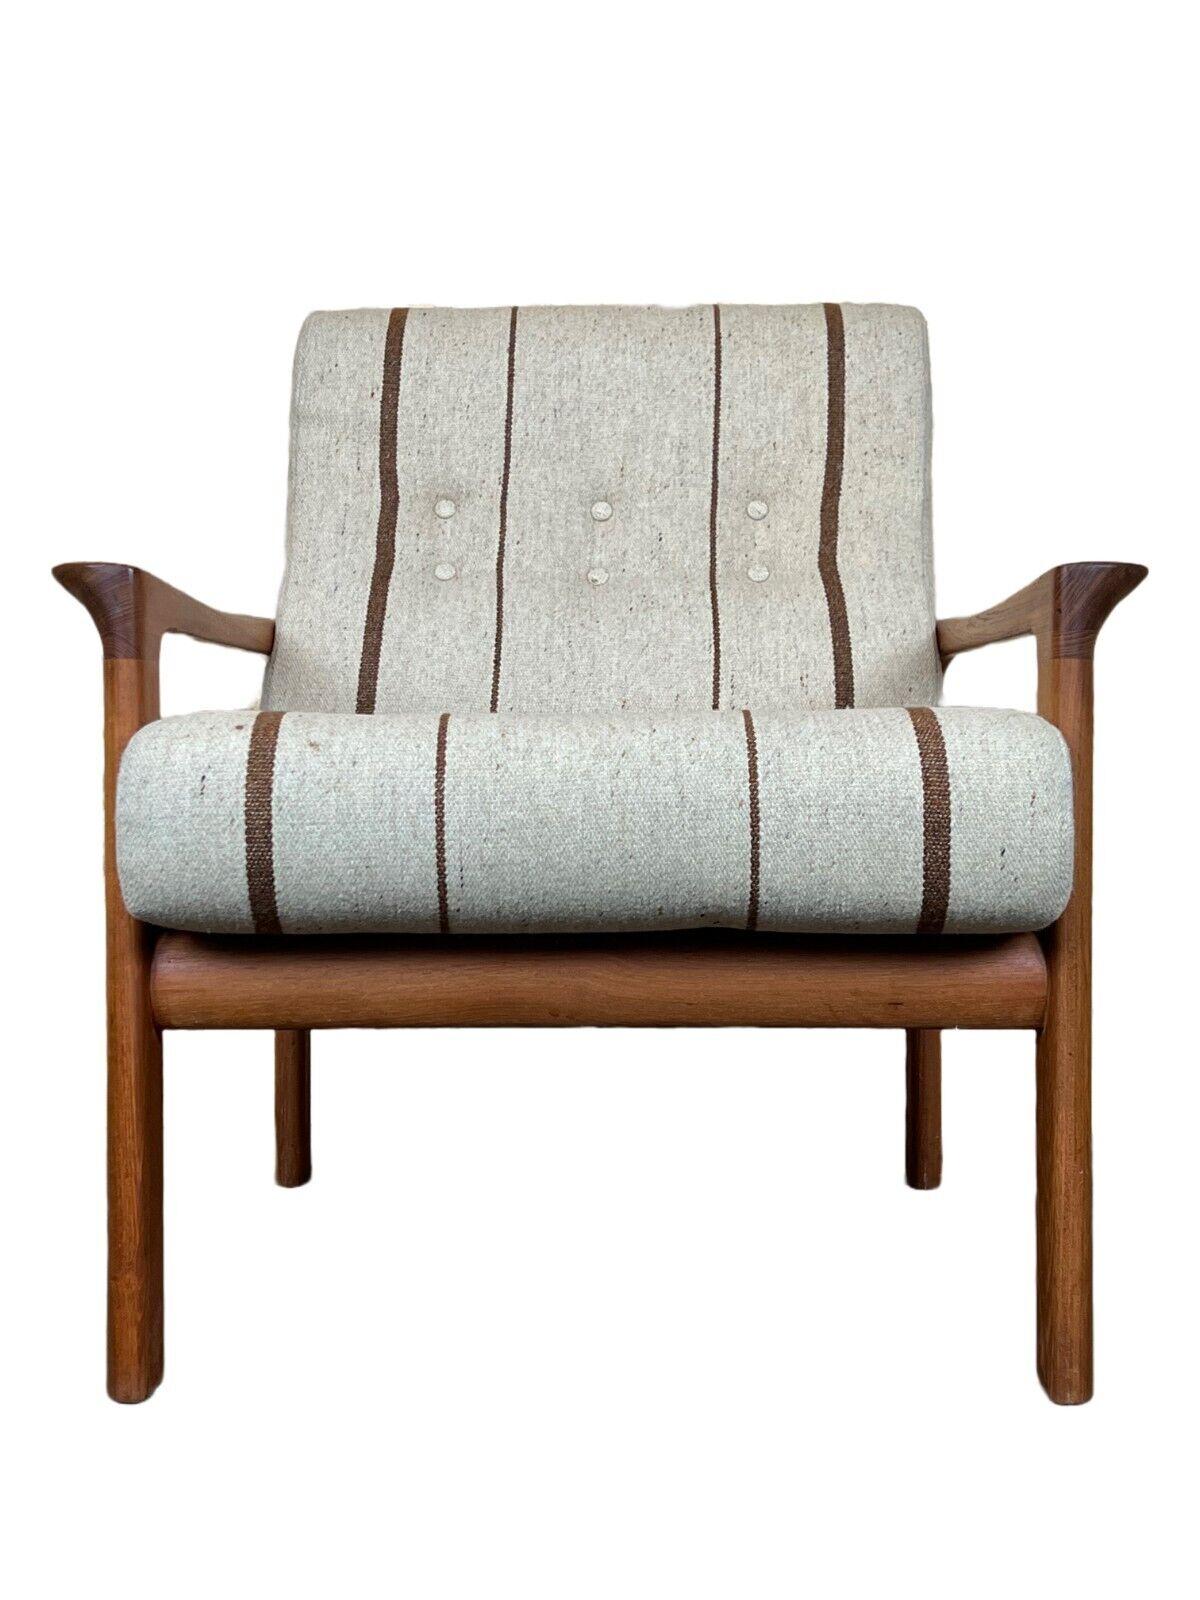 60s 70s teak easy chair Sven Ellekaer for Komfort Design Denmark

Object: Easy Chair

Manufacturer: comfort

Condition: good - vintage

Age: around 1960-1970

Dimensions:

Width = 76cm
Depth = 82cm
Height = 82cm
Seat height =